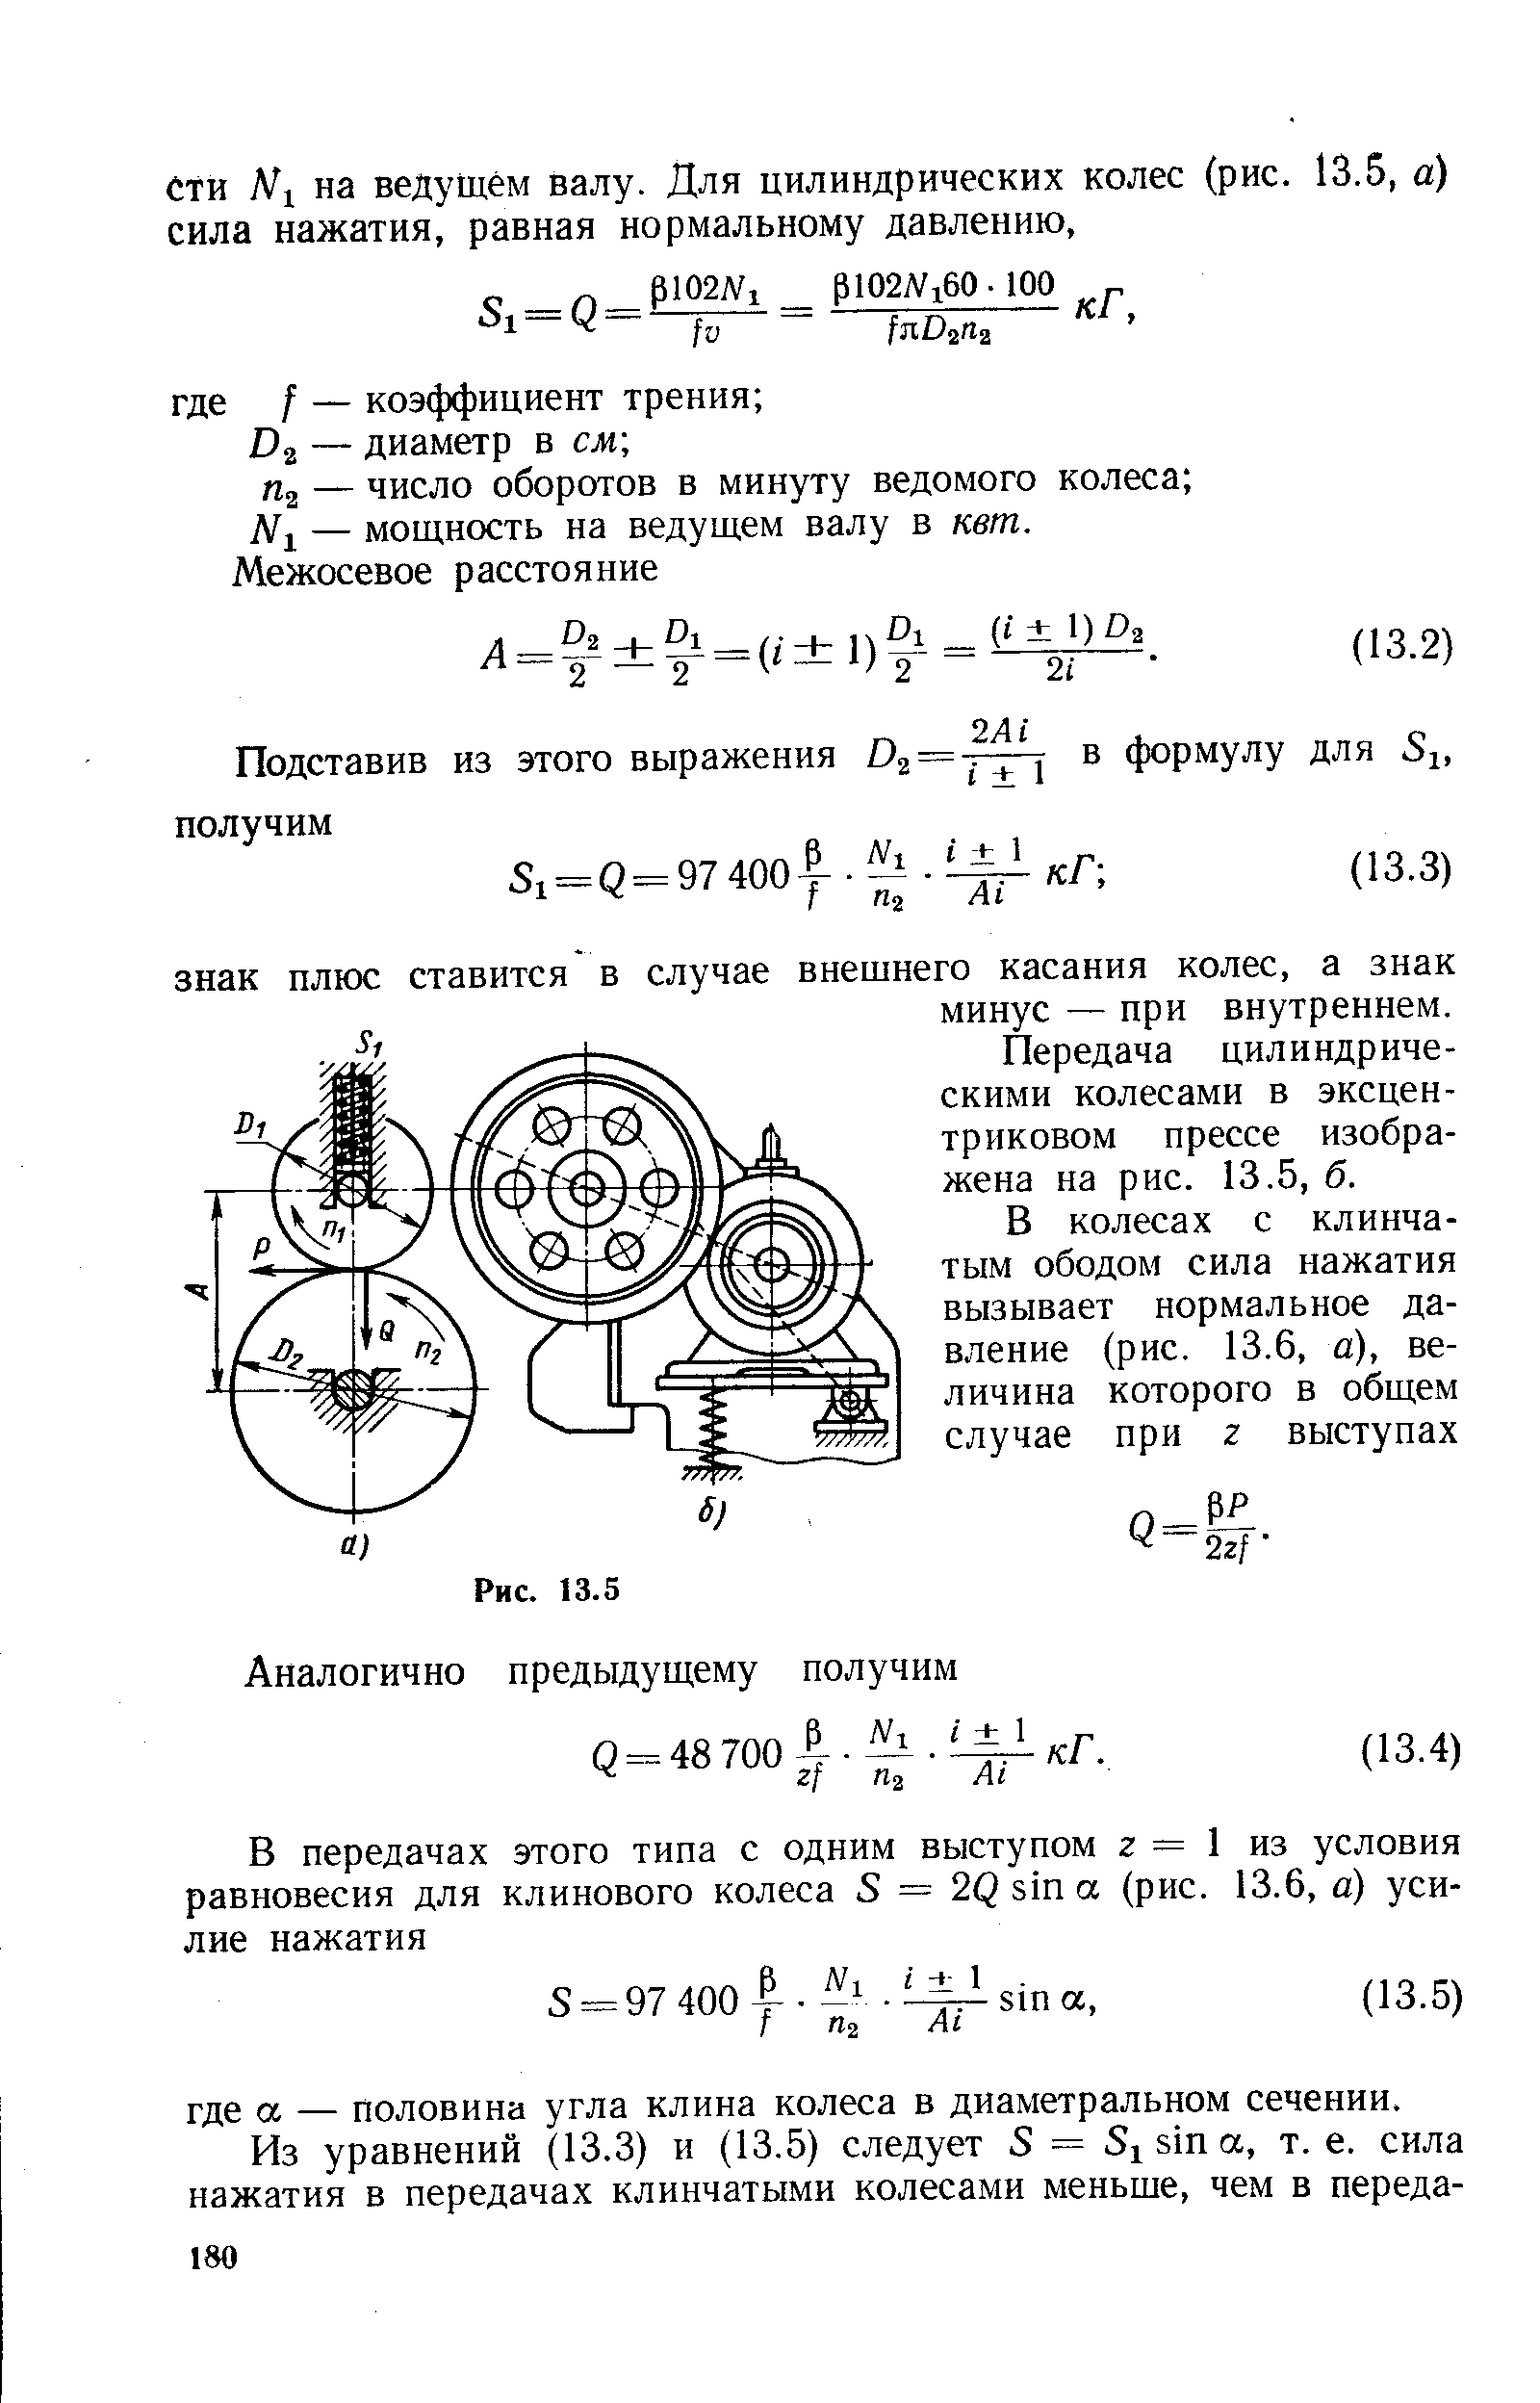 Передача цилиндрическими колесами в эксцентриковом прессе изображена на рис. 13.5, б.
